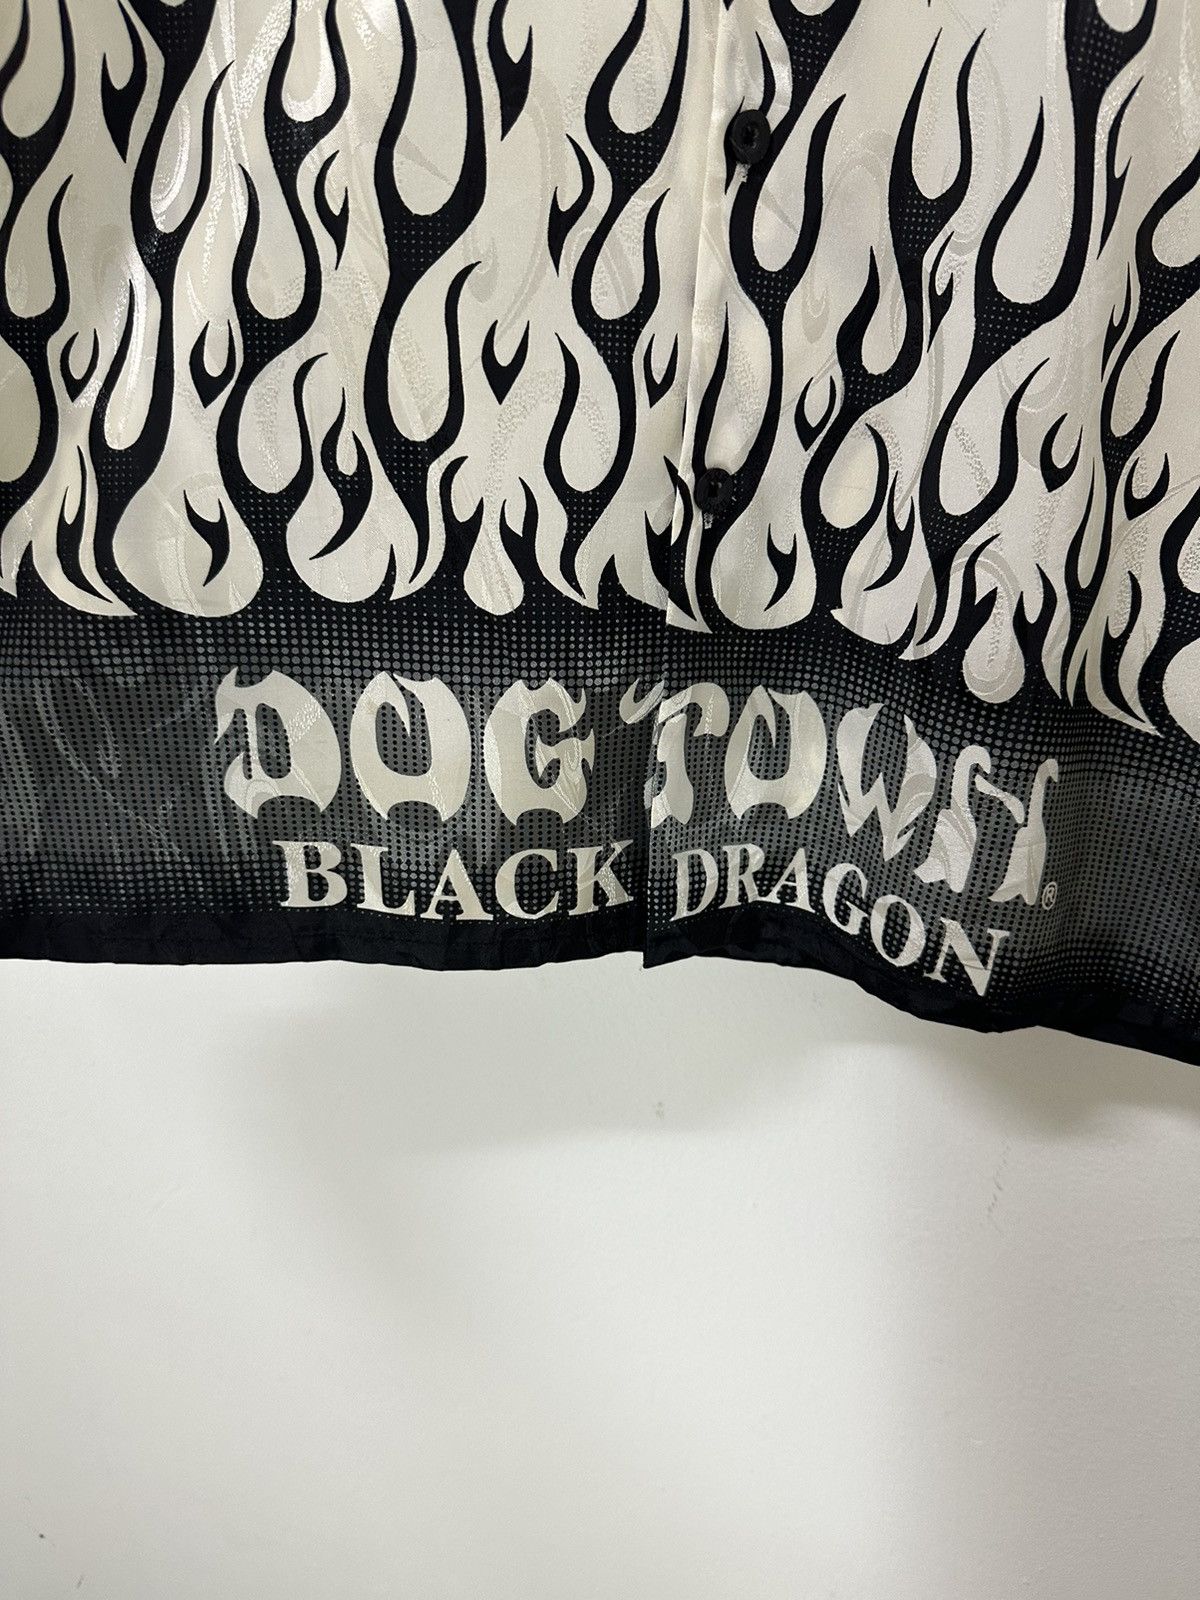 Dogtown - Vintage Dog town Button Up Shirt Black Flame Black Dragon - 6